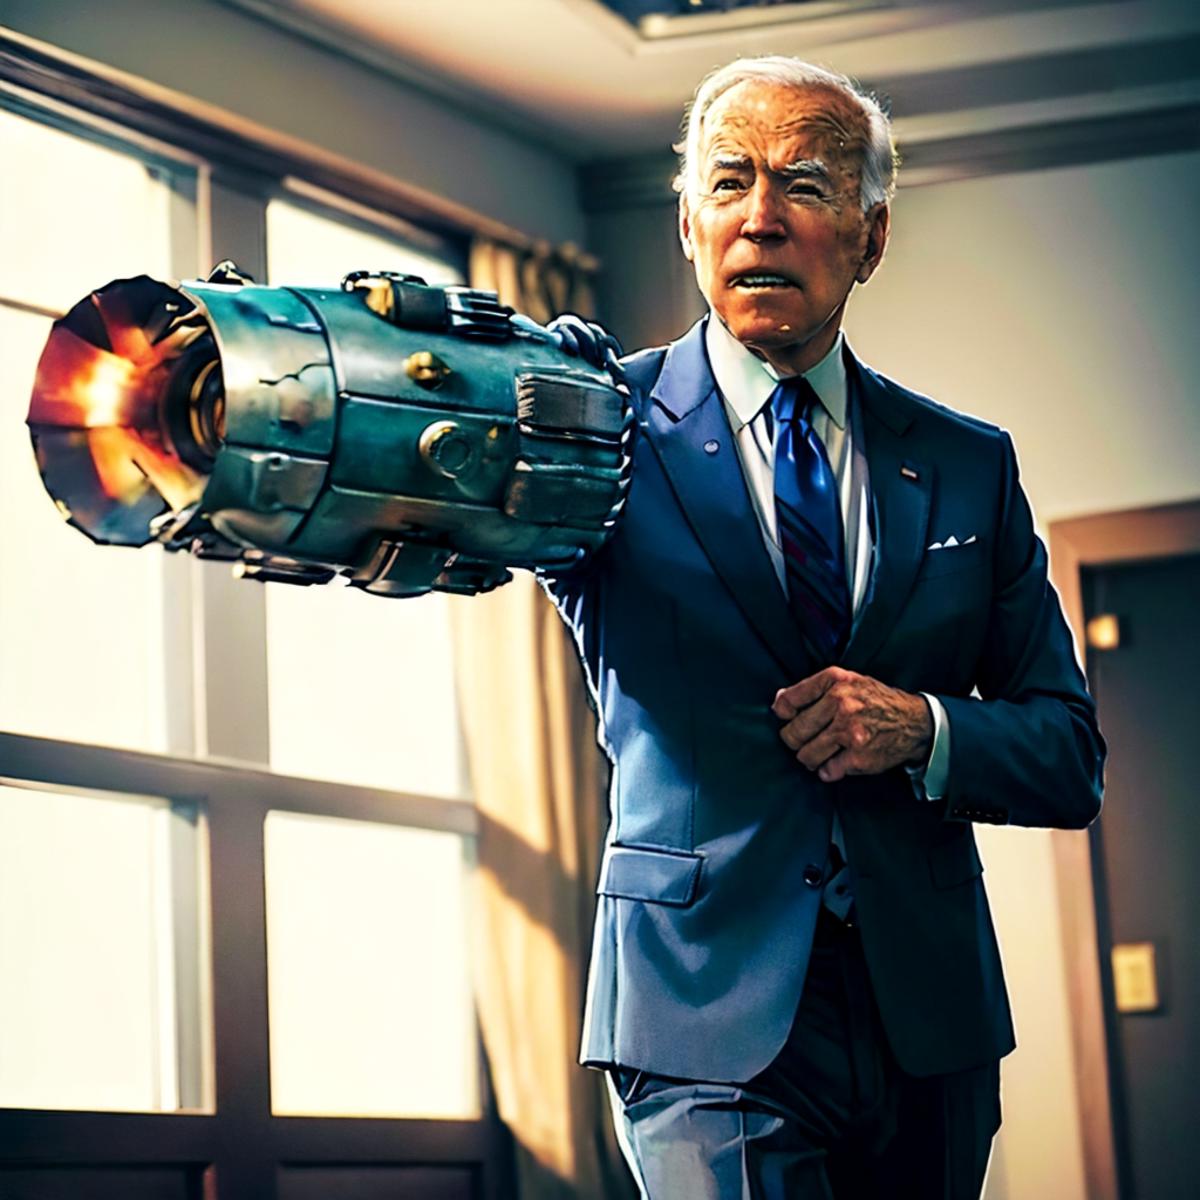 Joe Biden I President of the USA I LoRA image by superskirv